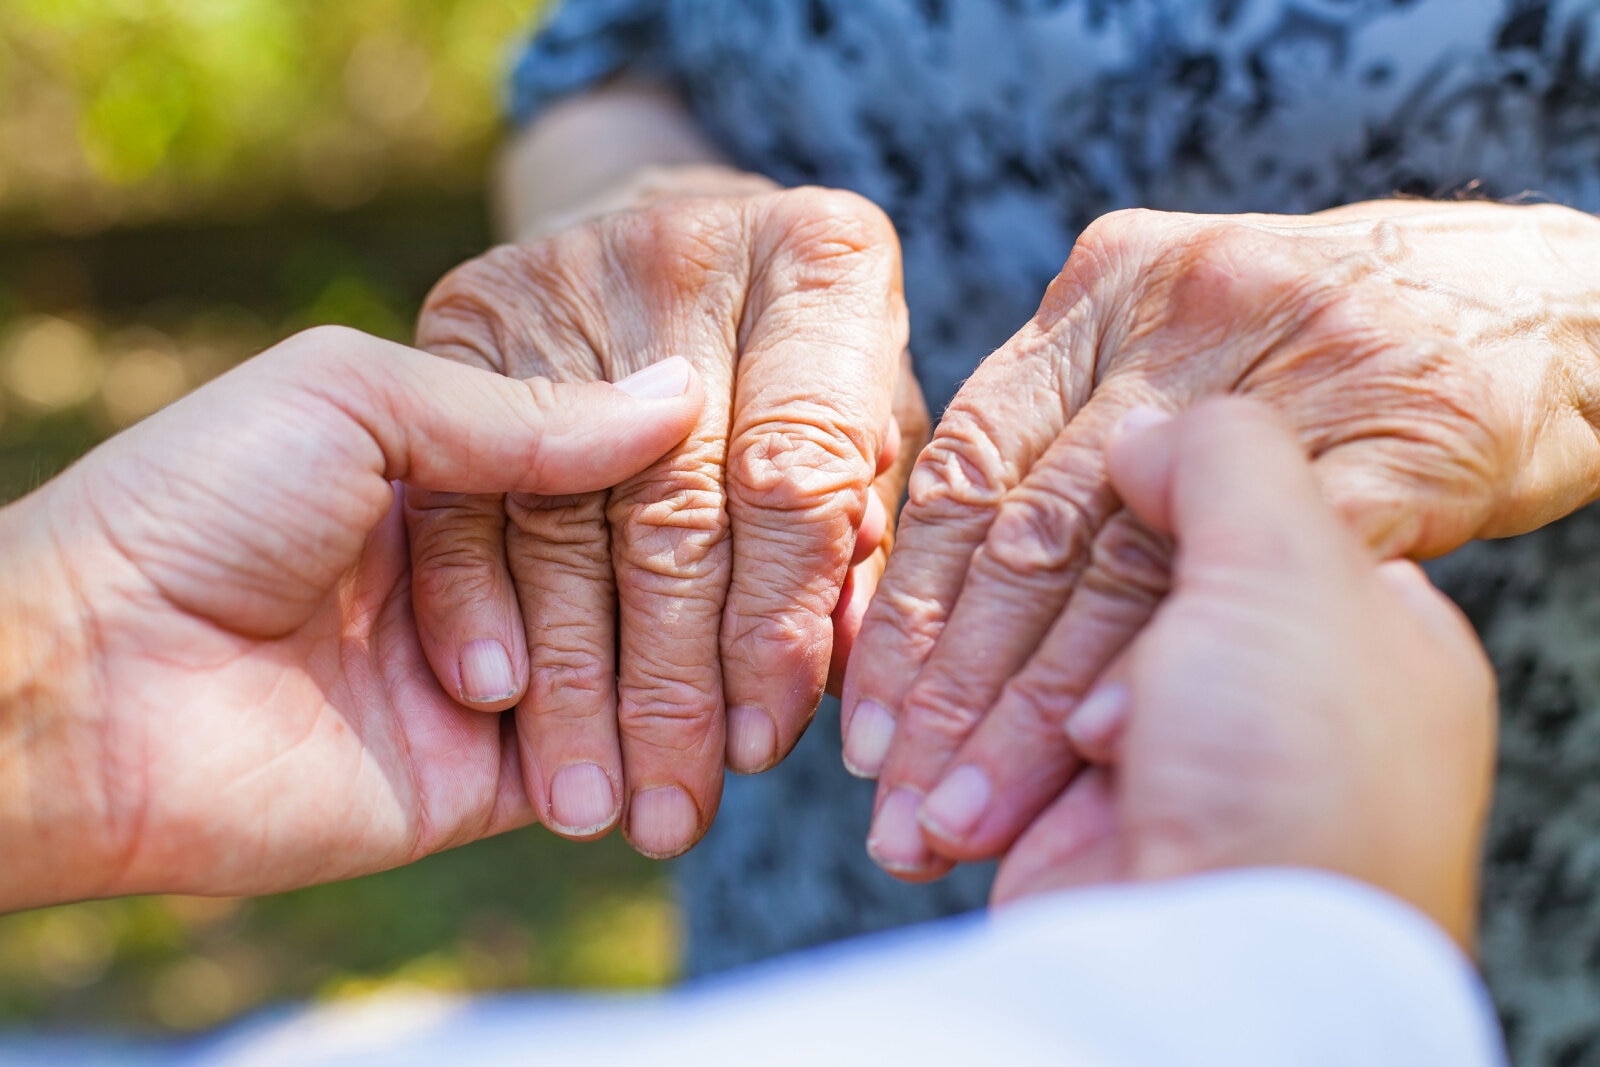 A nurse hands holding hands of senior woman with Parkinson's Disease.